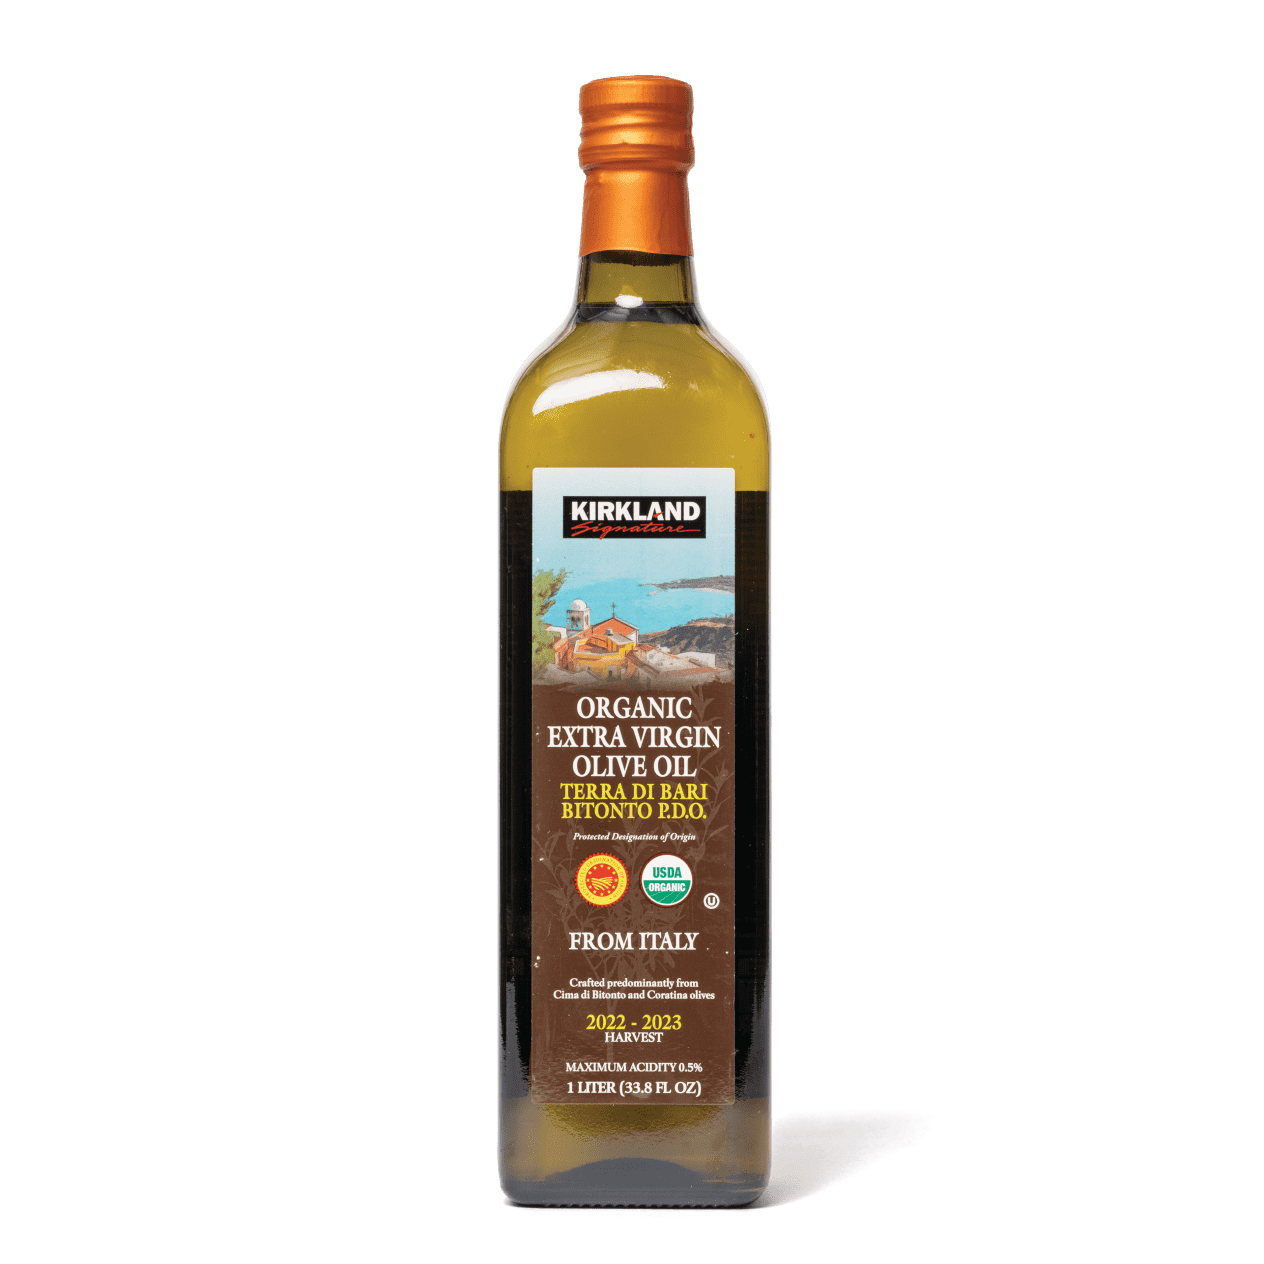 Barrel of olive oil at Costco : r/mildlyinteresting